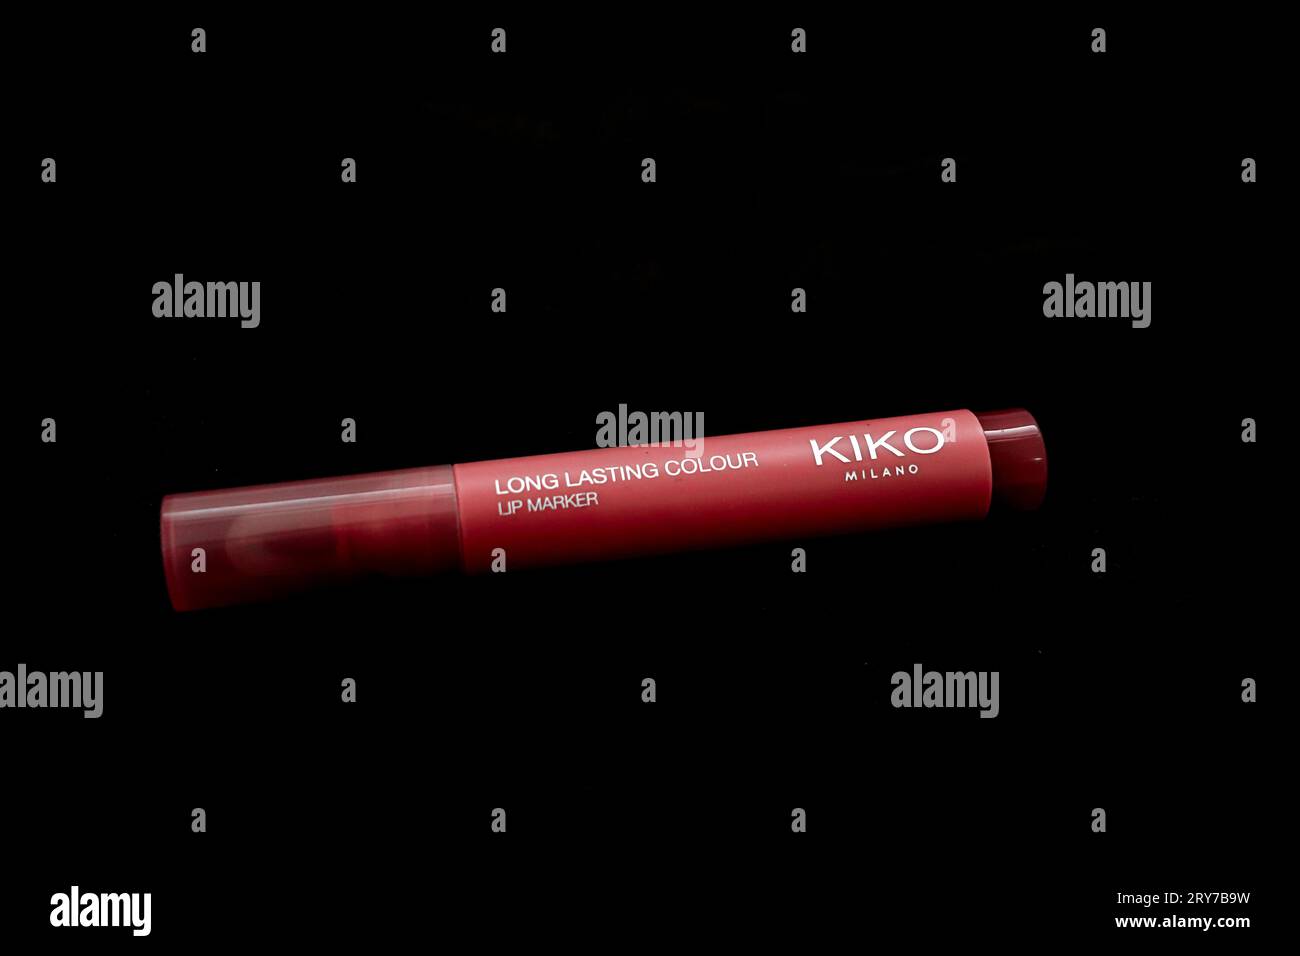 Long Lasting Colour Lip Marker by Kiko Milano, an Italian professional cosmetics brand isolated on black background Stock Photo